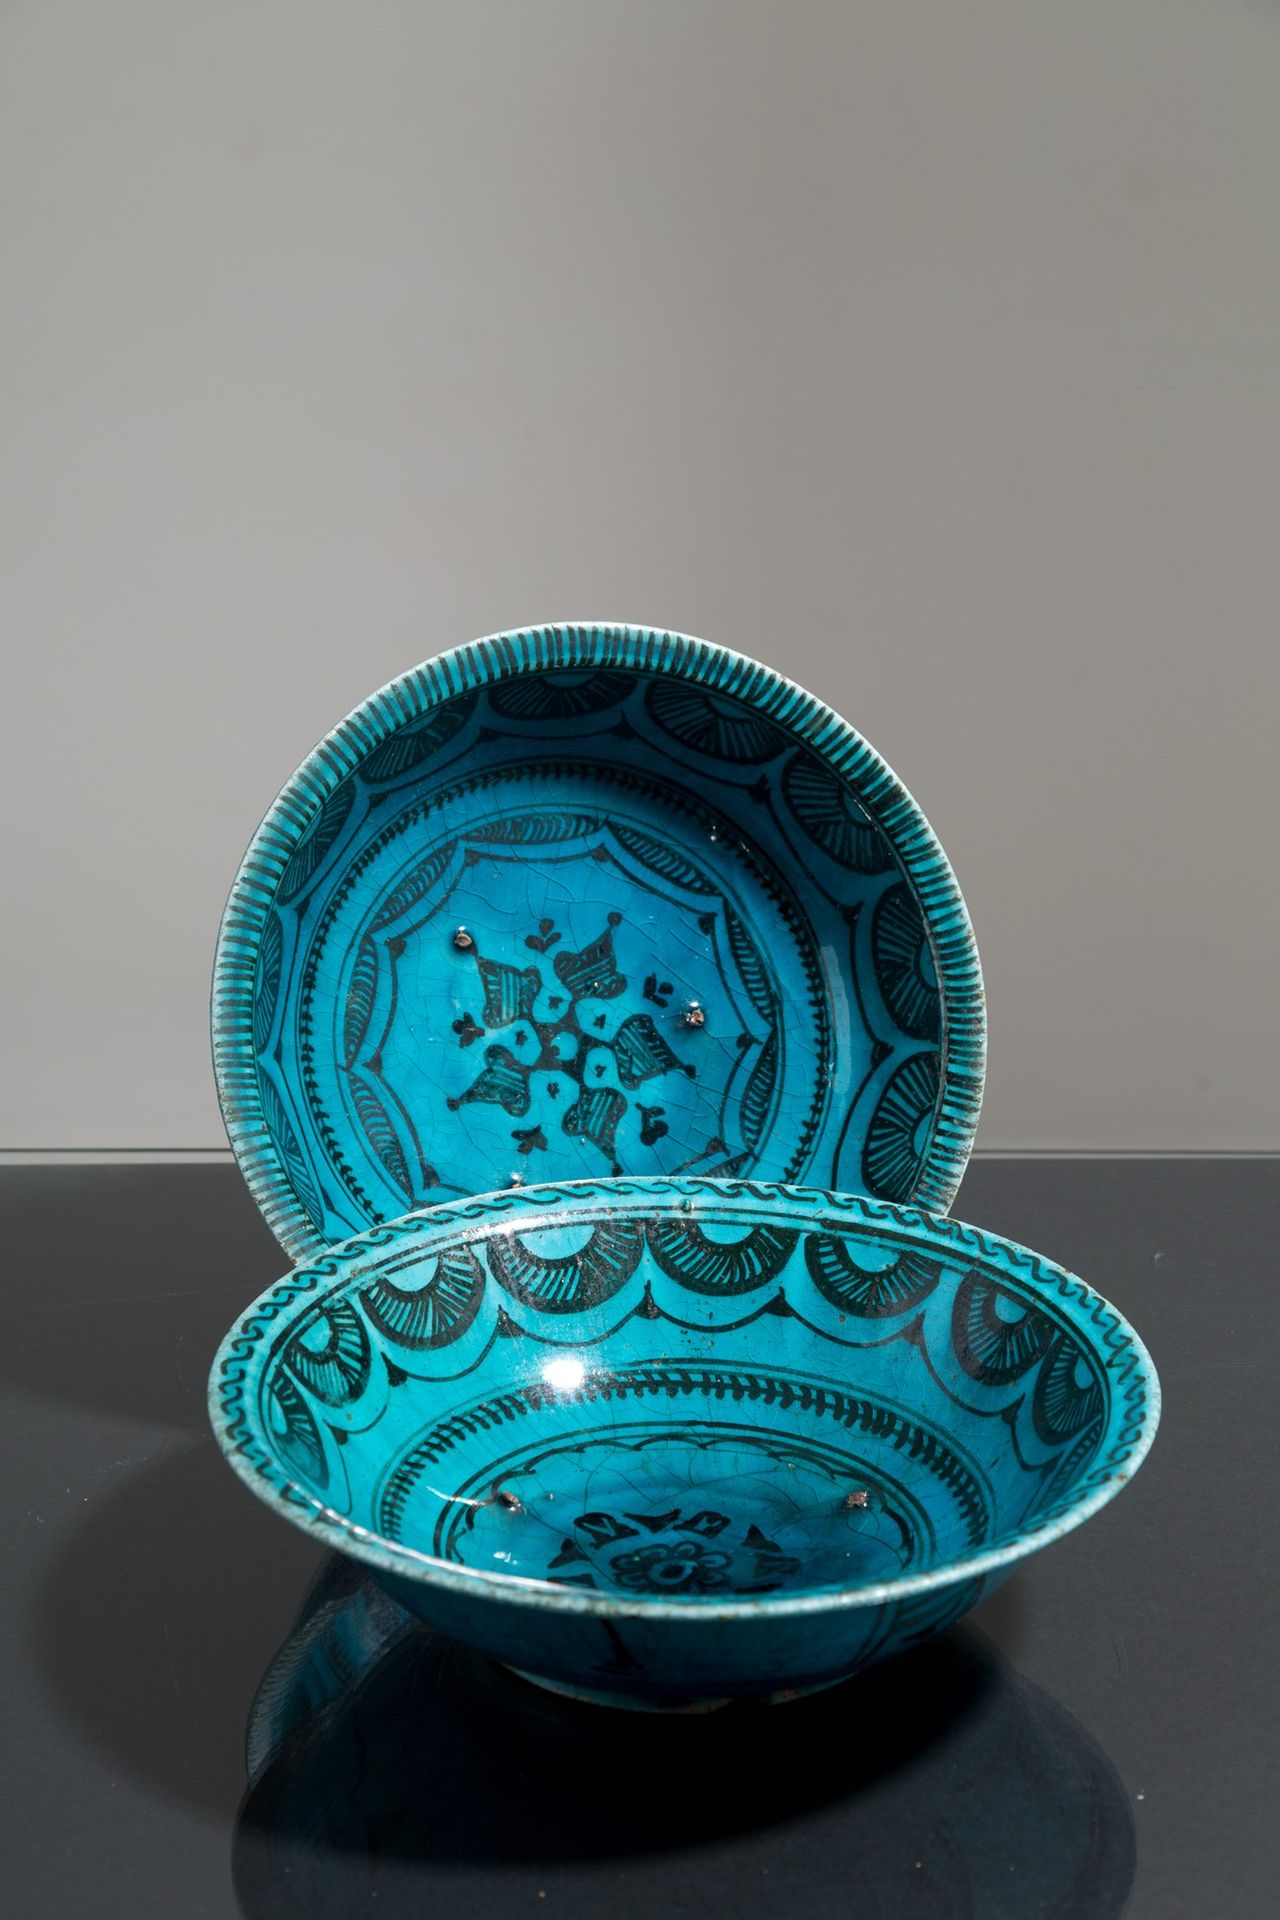 Two ceramic tureens 两个蓝色陶瓷汤锅。北非。17世纪。缺陷。直径约25厘米。